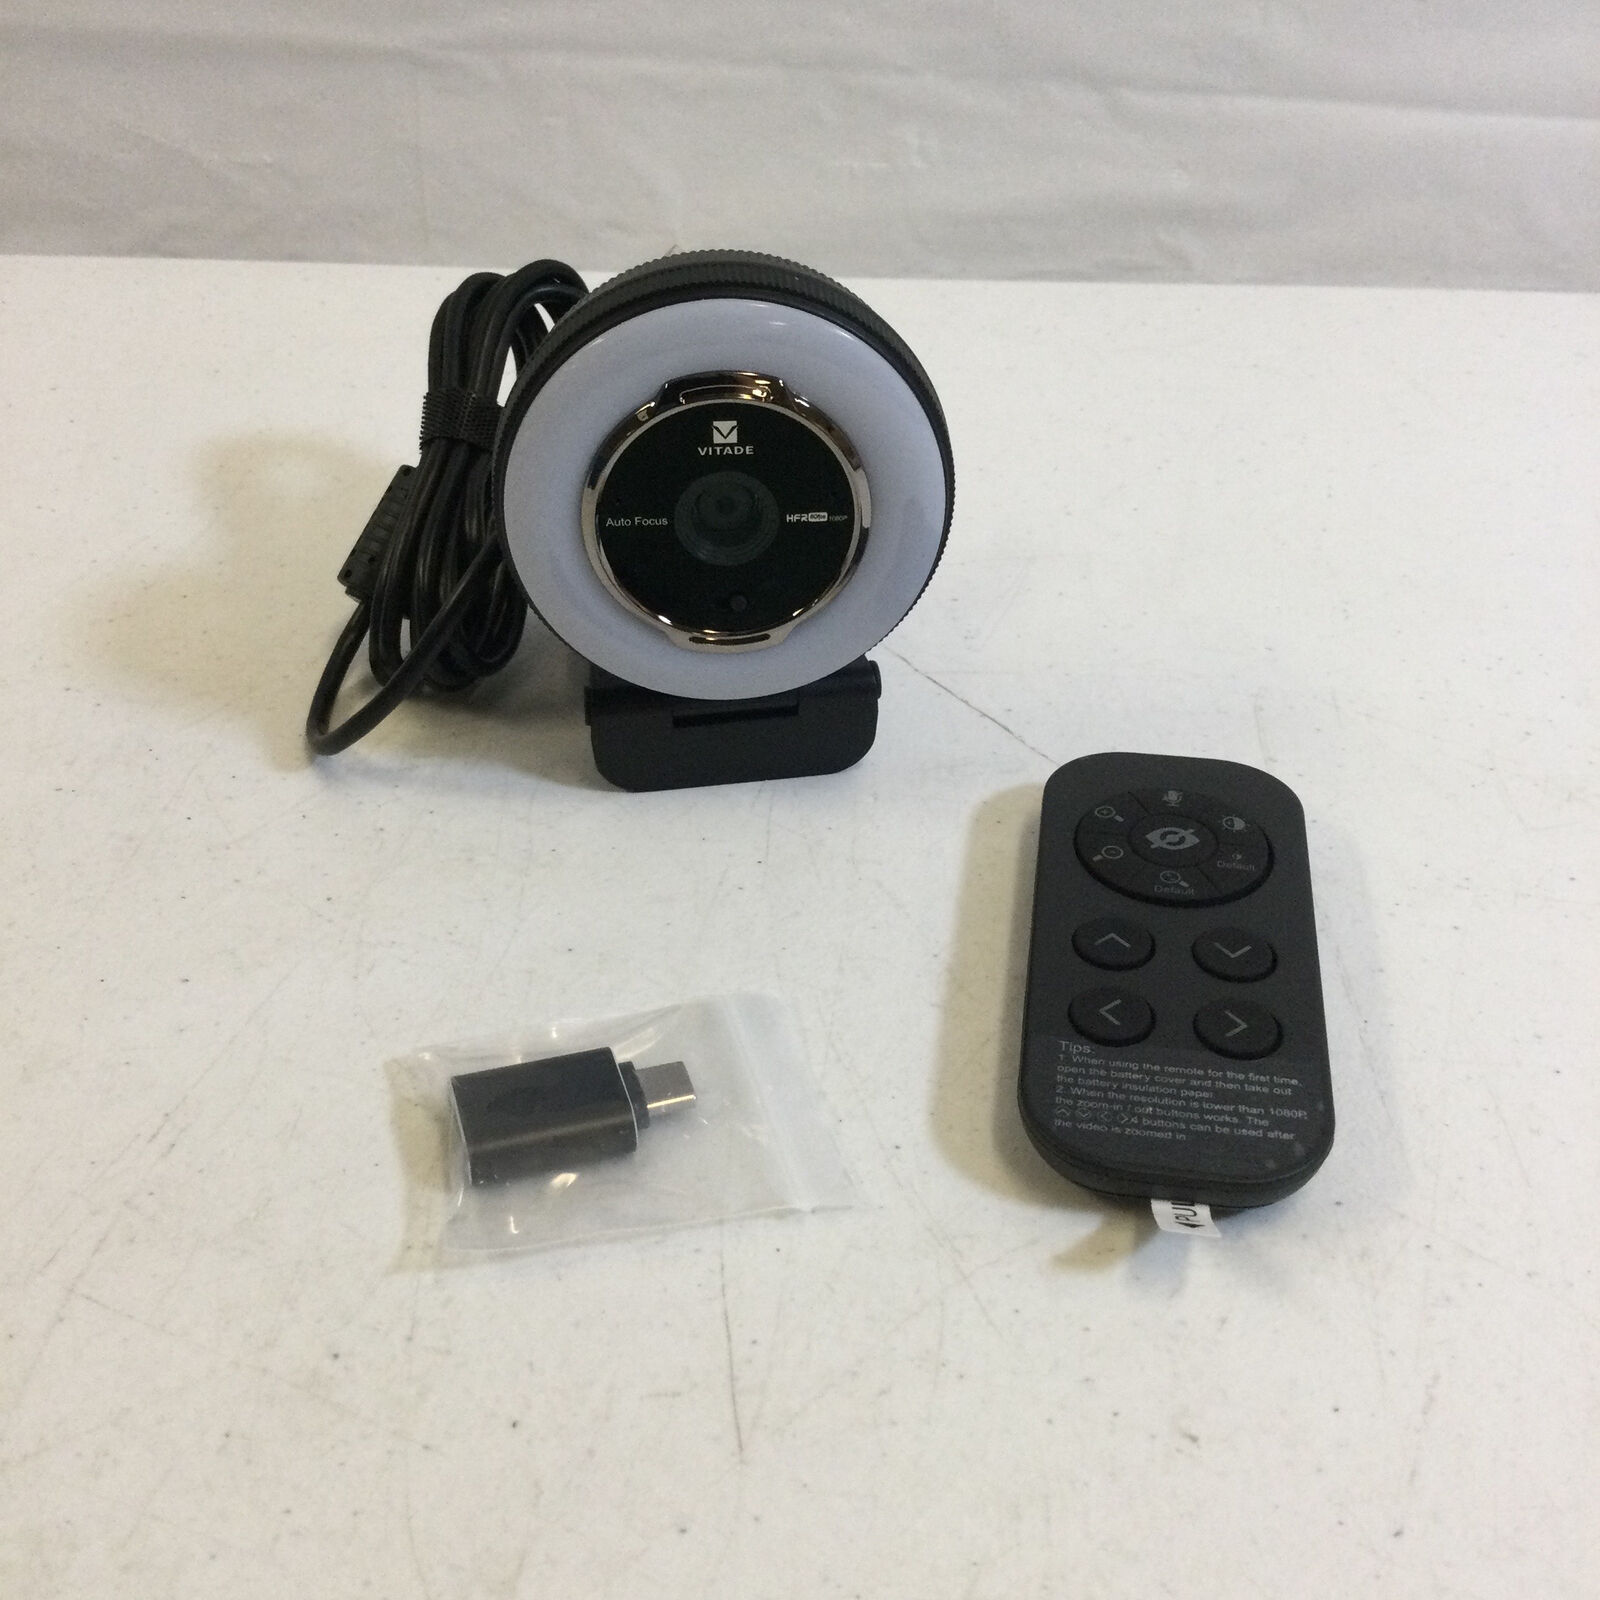 VITADE 862PRO Black Auto Focus 1080P 60FPS Remote Control Streaming Webcam